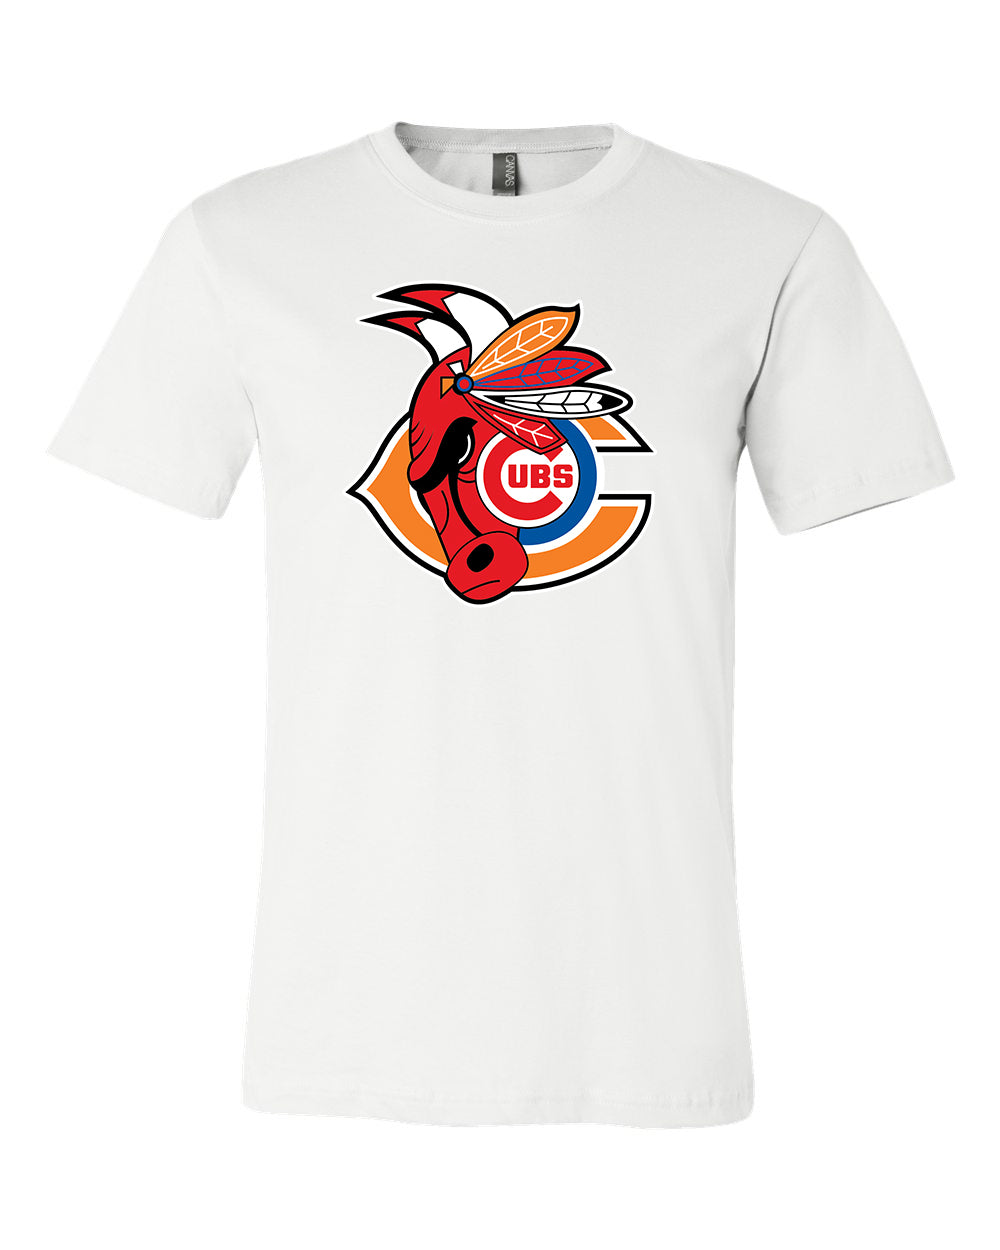 Chicago White Sox Bears Cubs Blackhawks T Shirt - Growkoc